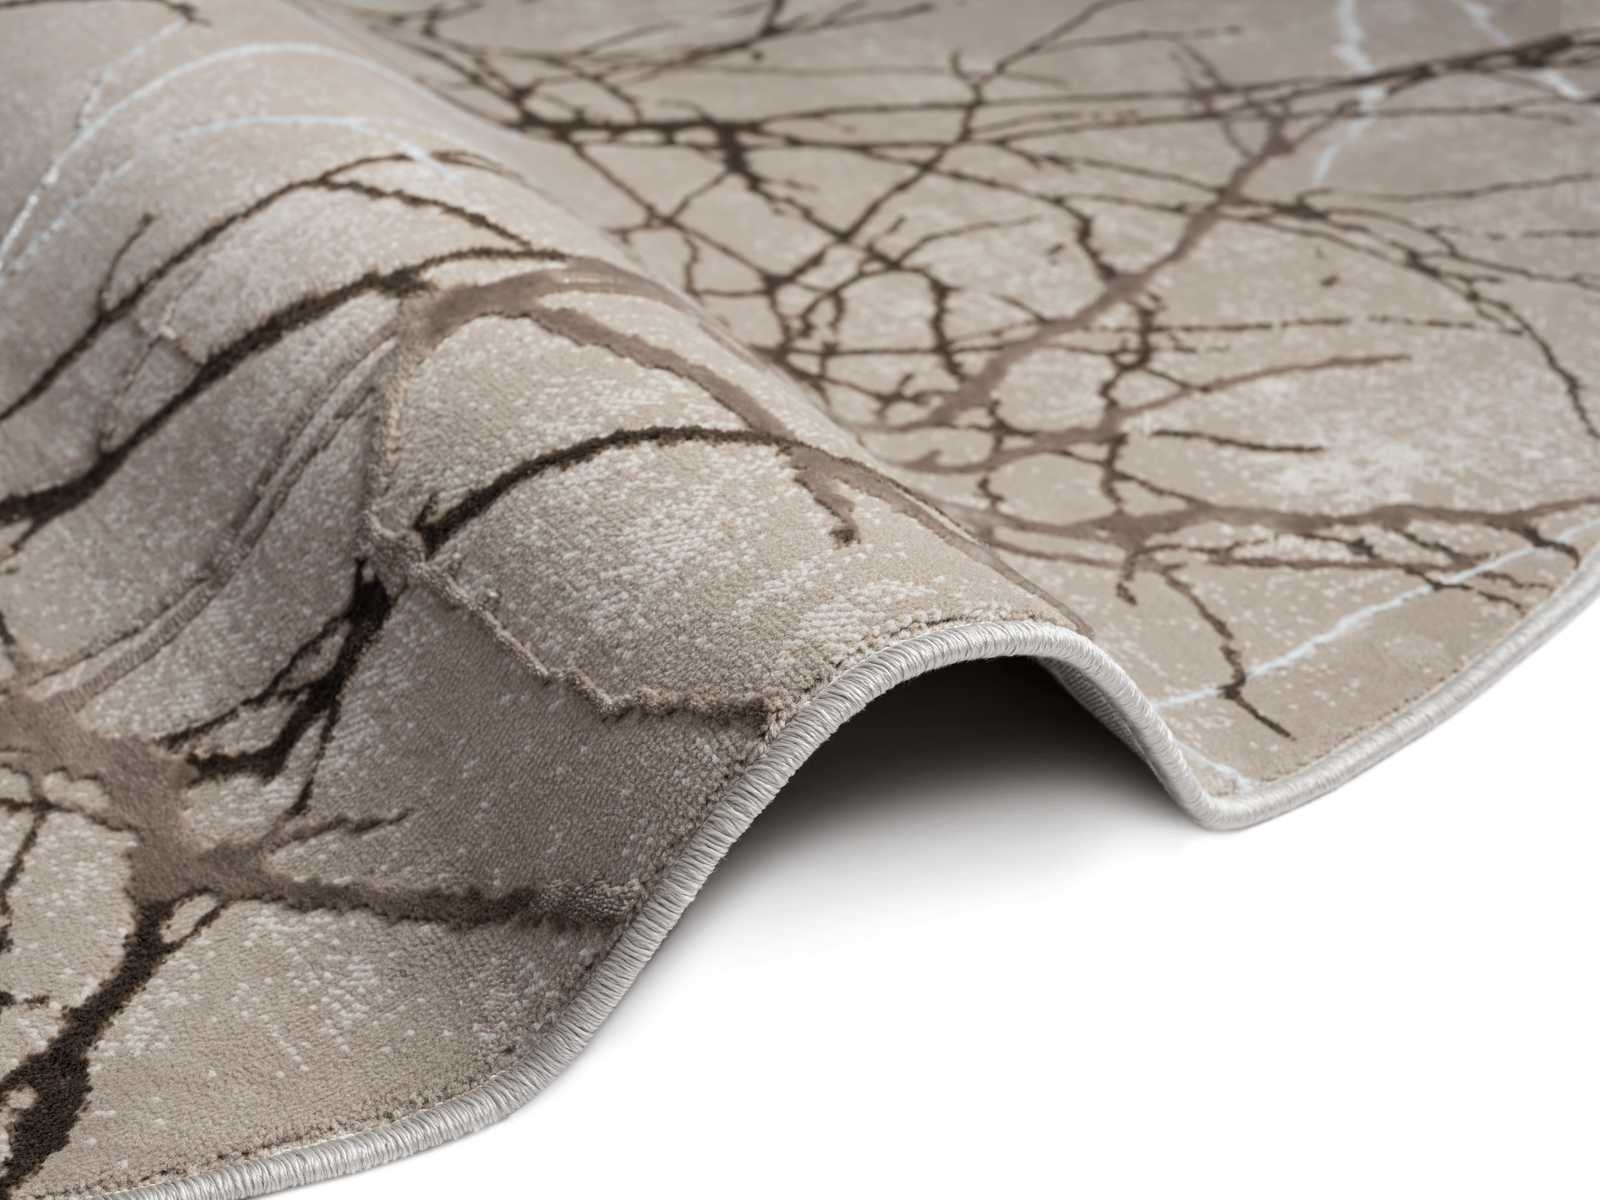             Pile carpet in soft beige - 150 x 80 cm
        